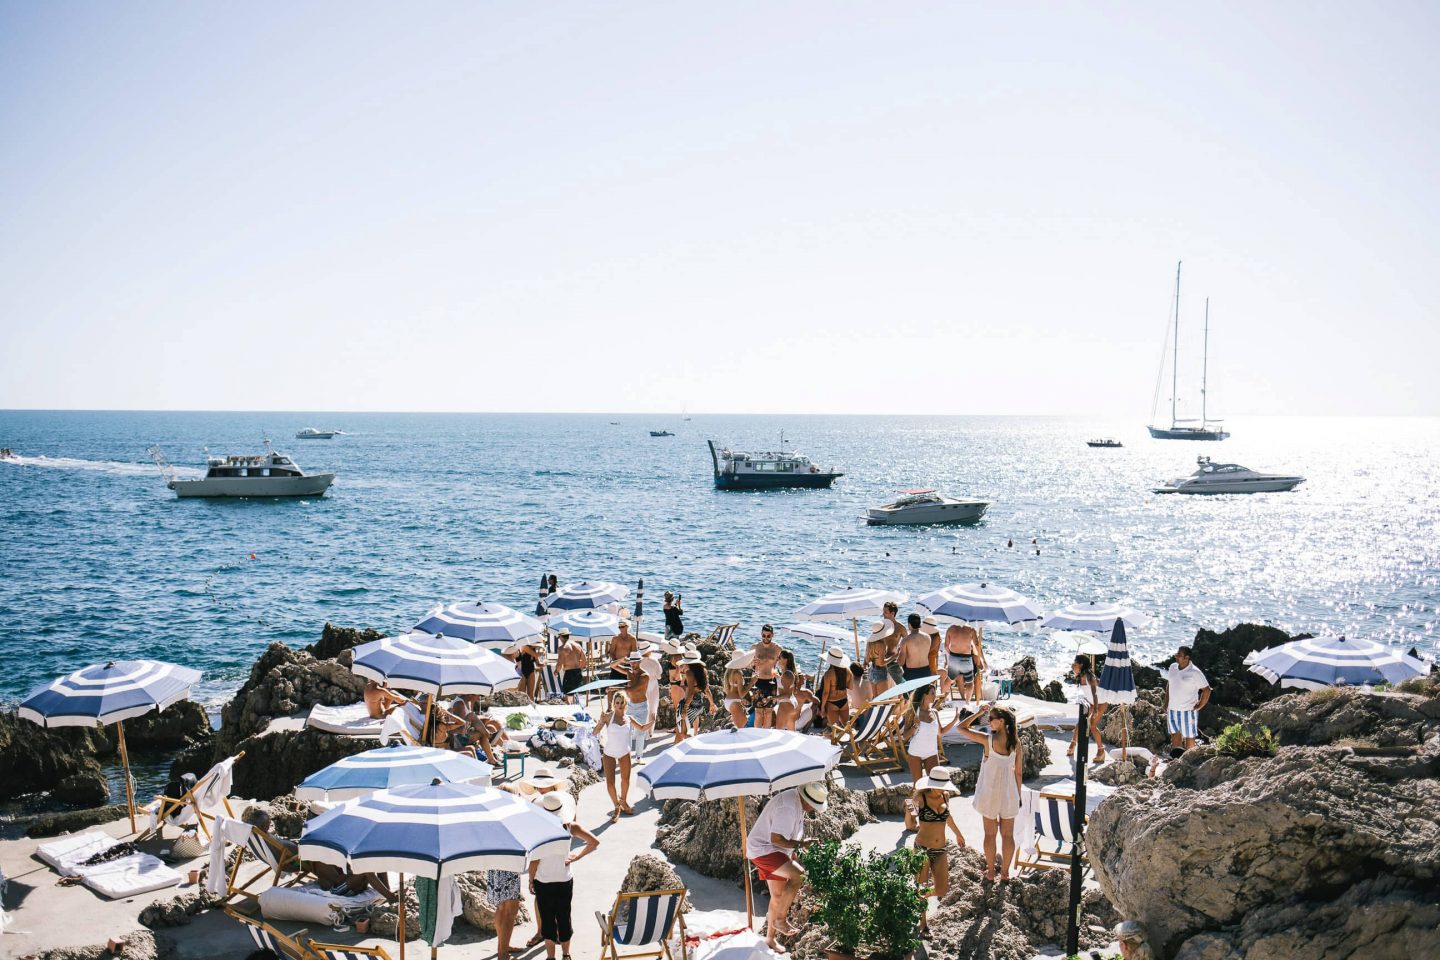 Guests under blue umbrellas La Fontelina in Capri at this Positano wedding weekend in Villa Tre Ville | Photo by Gianni di Natale